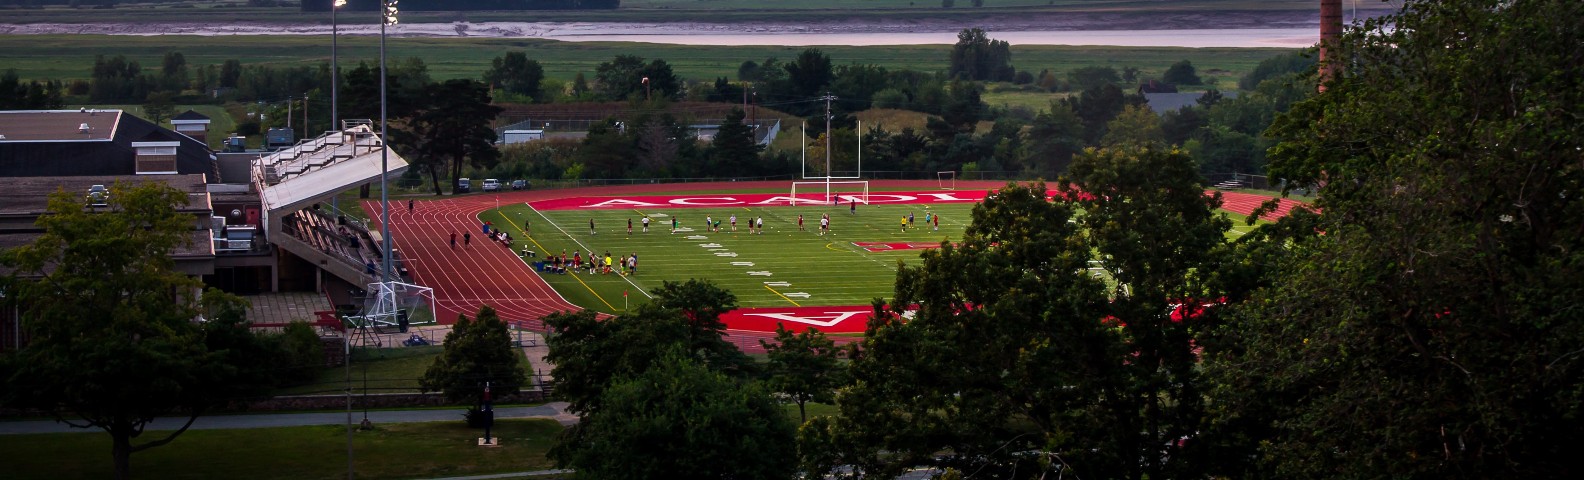 Acadia University football field at sunset